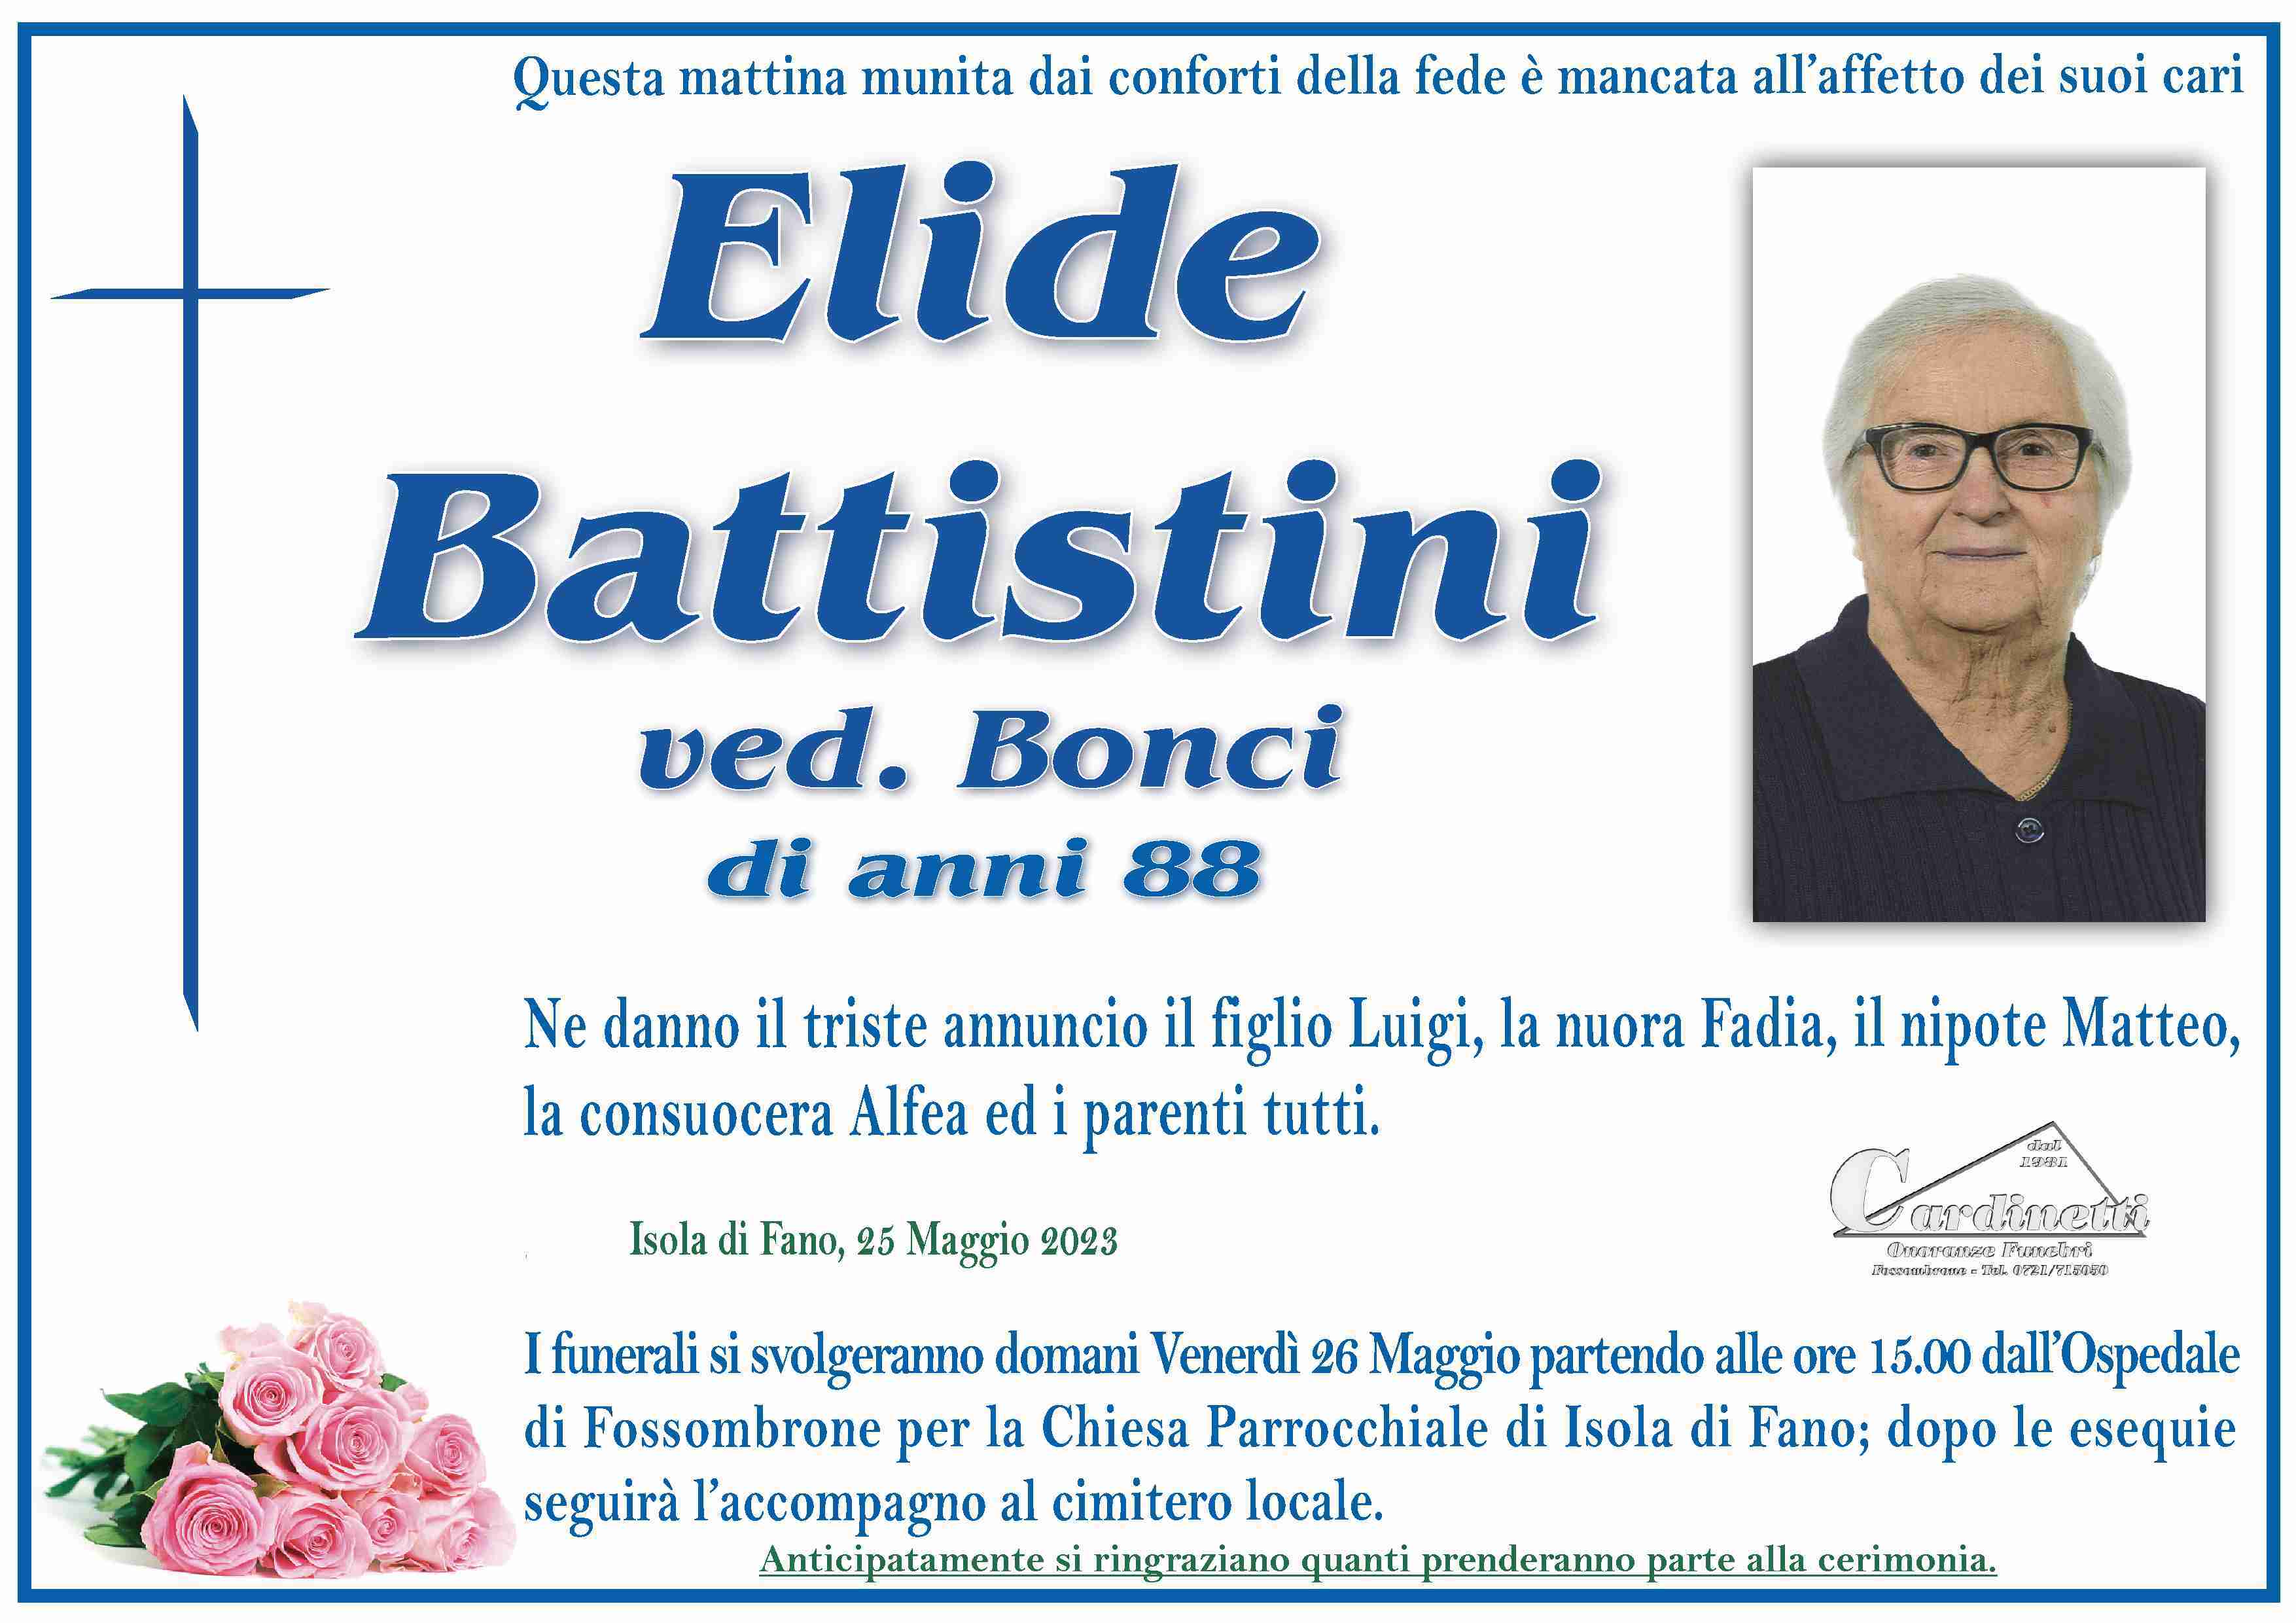 Elide Battistini